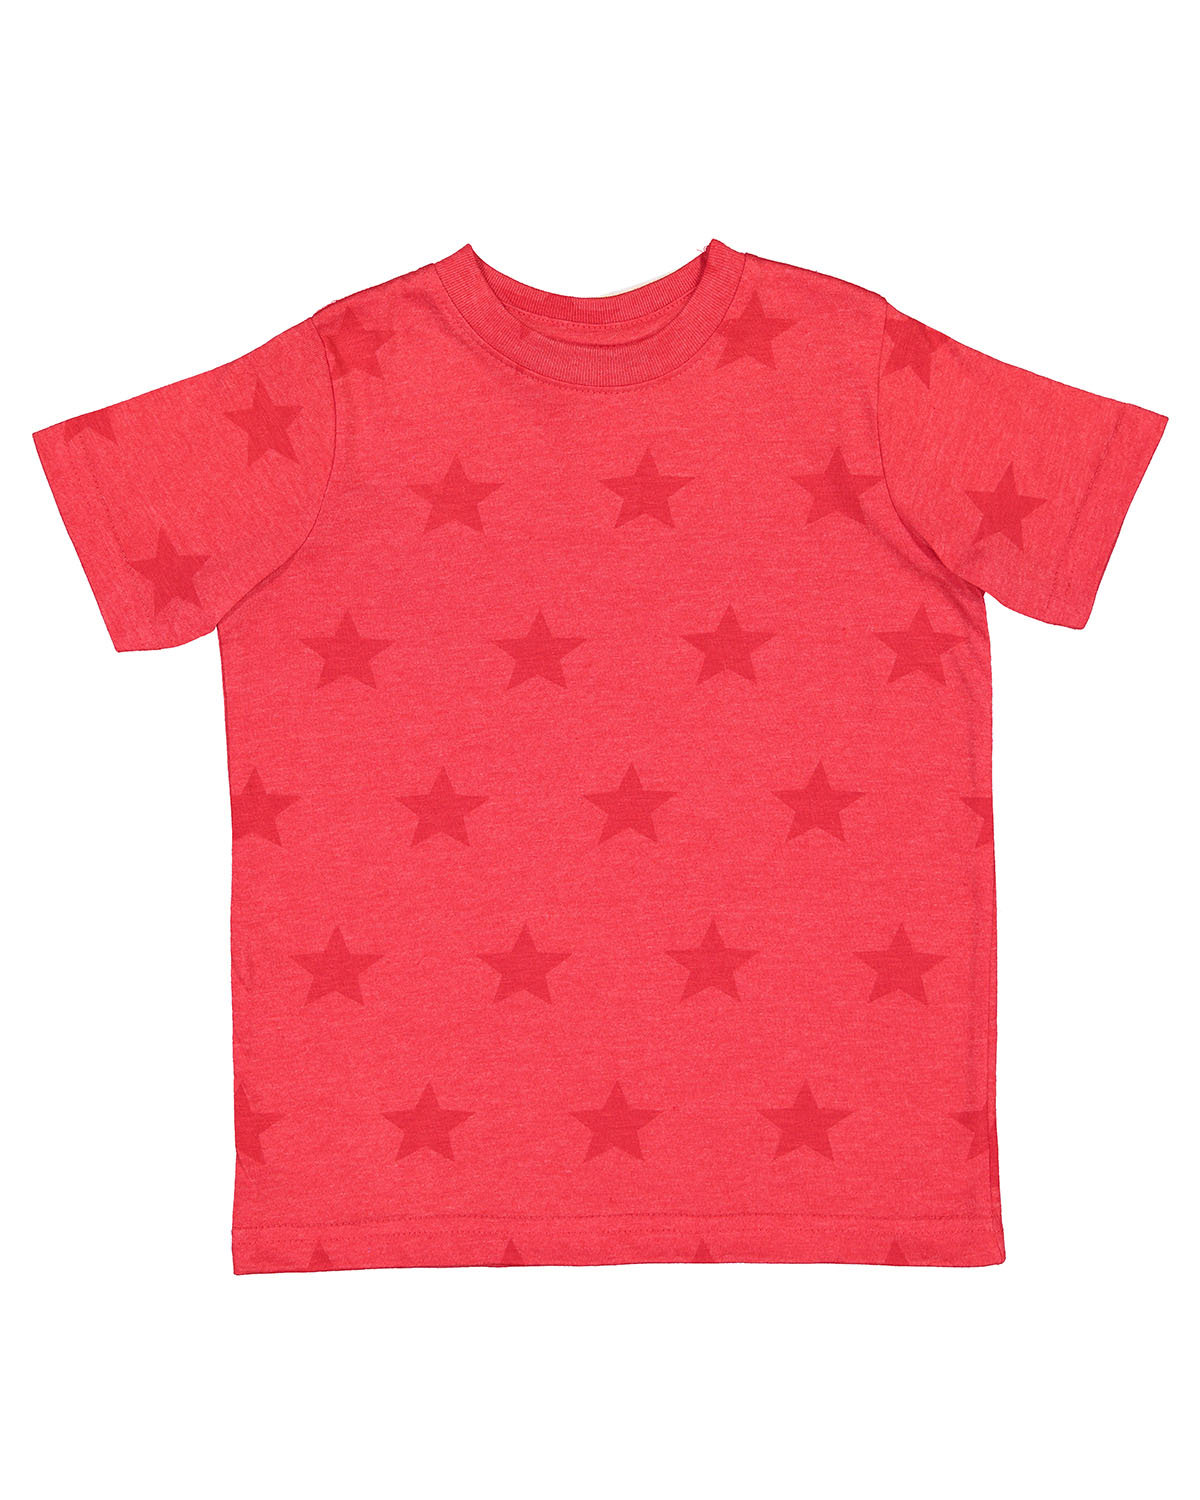 Toddler Five Star T-Shirt-Code Five